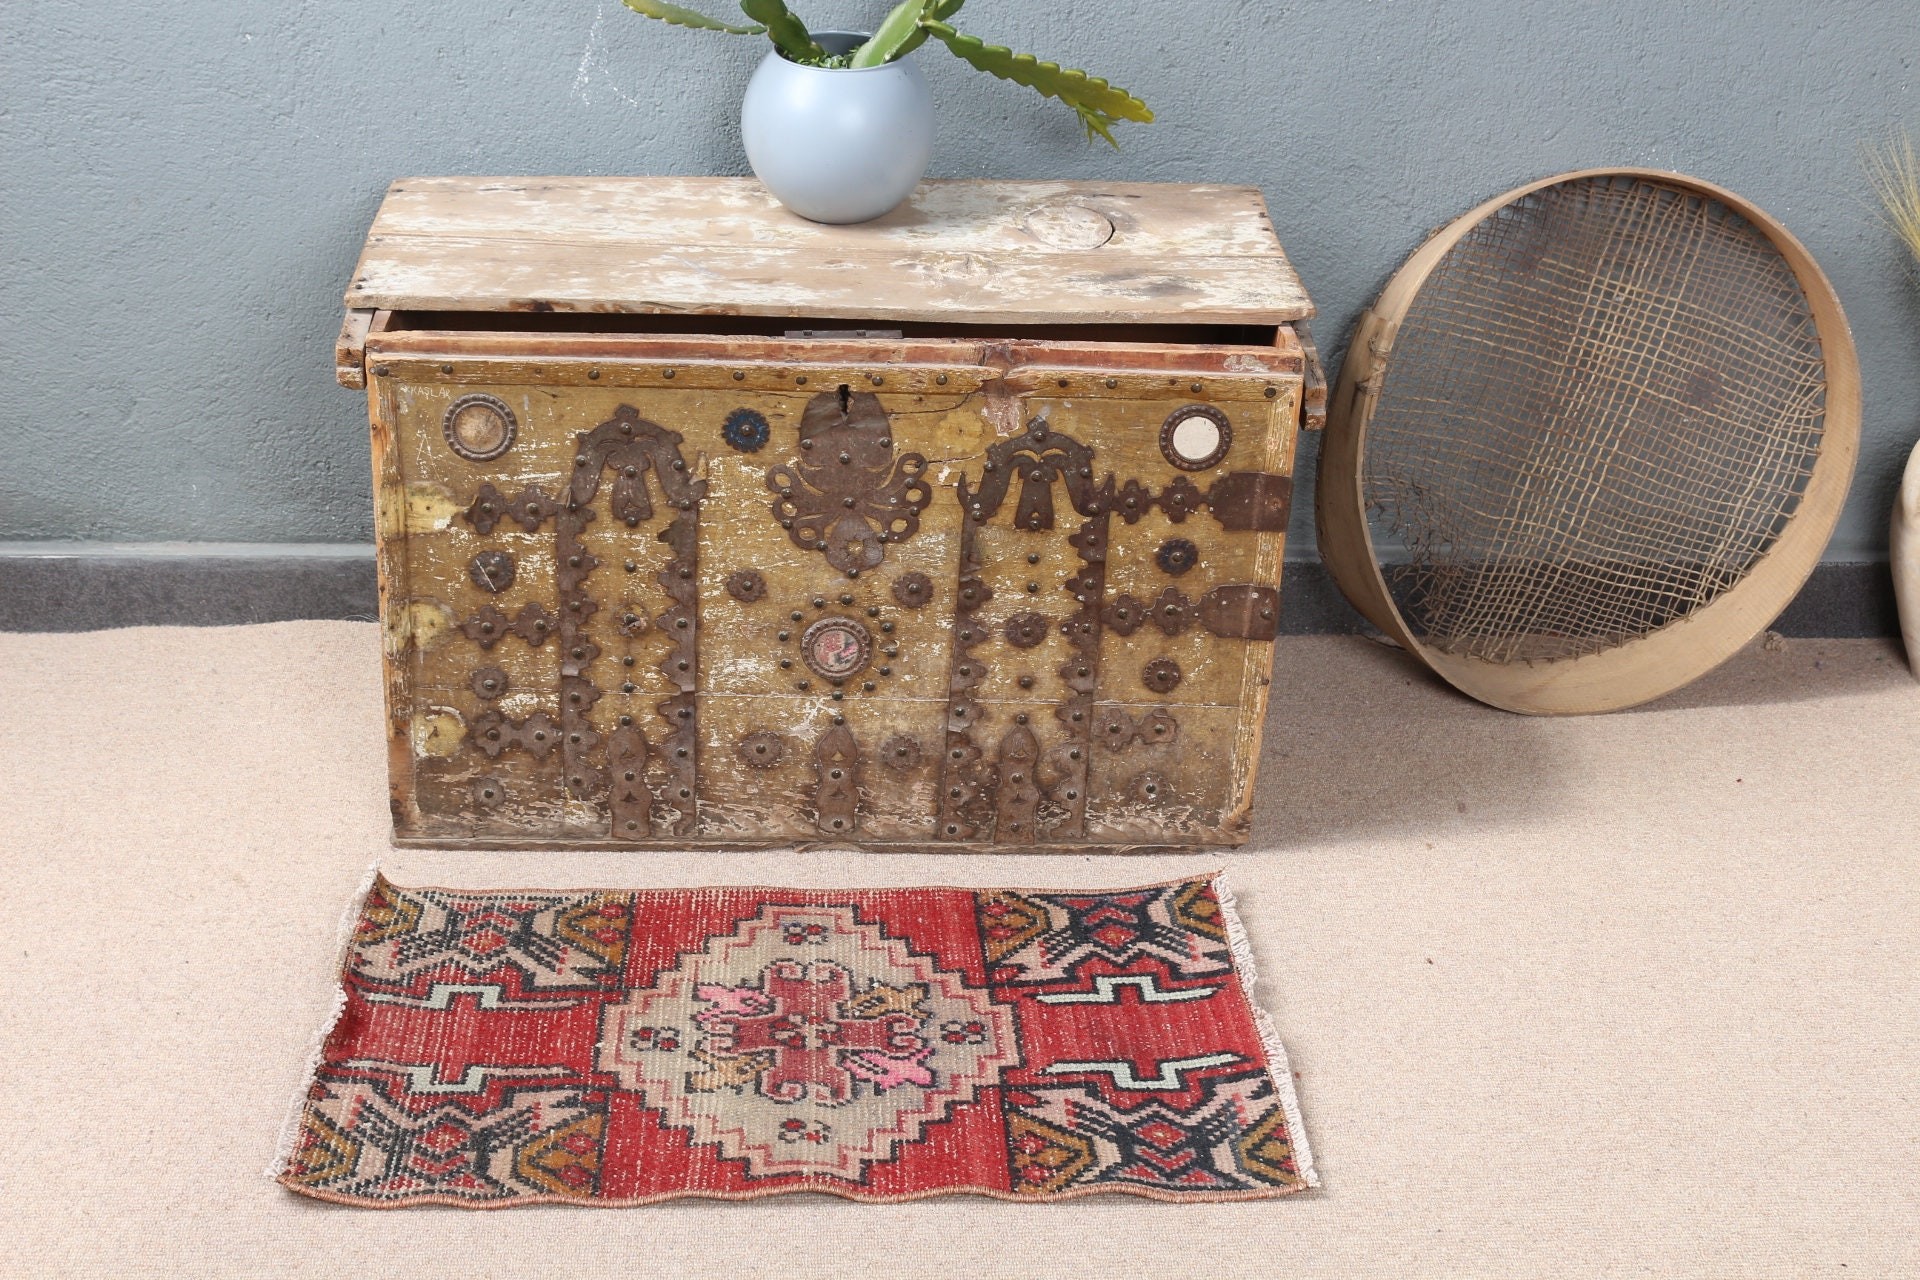 Antique Rug, Bath Rugs, Red Moroccan Rug, Art Rug, Entry Rug, Turkish Rug, 1.4x2.5 ft Small Rug, Rugs for Car Mat, Vintage Rug, Floor Rug